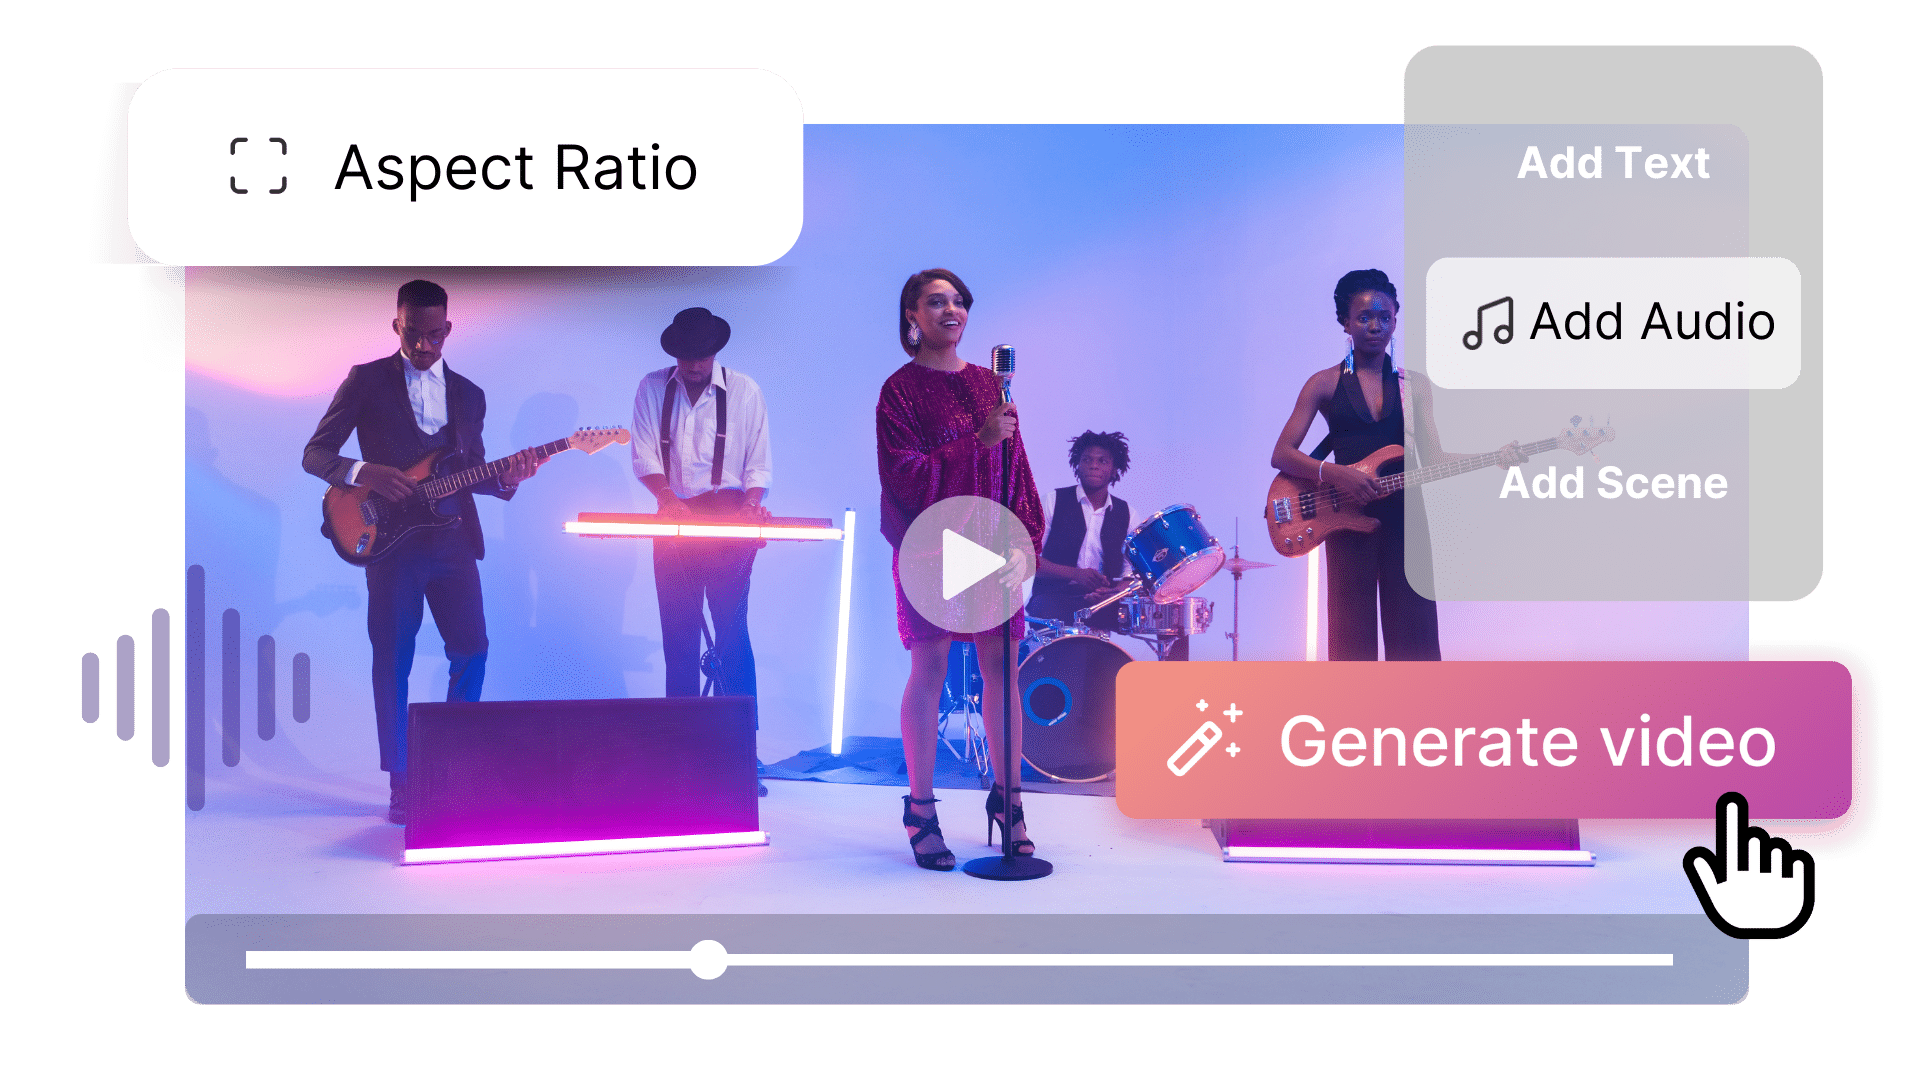 Music Video Generator